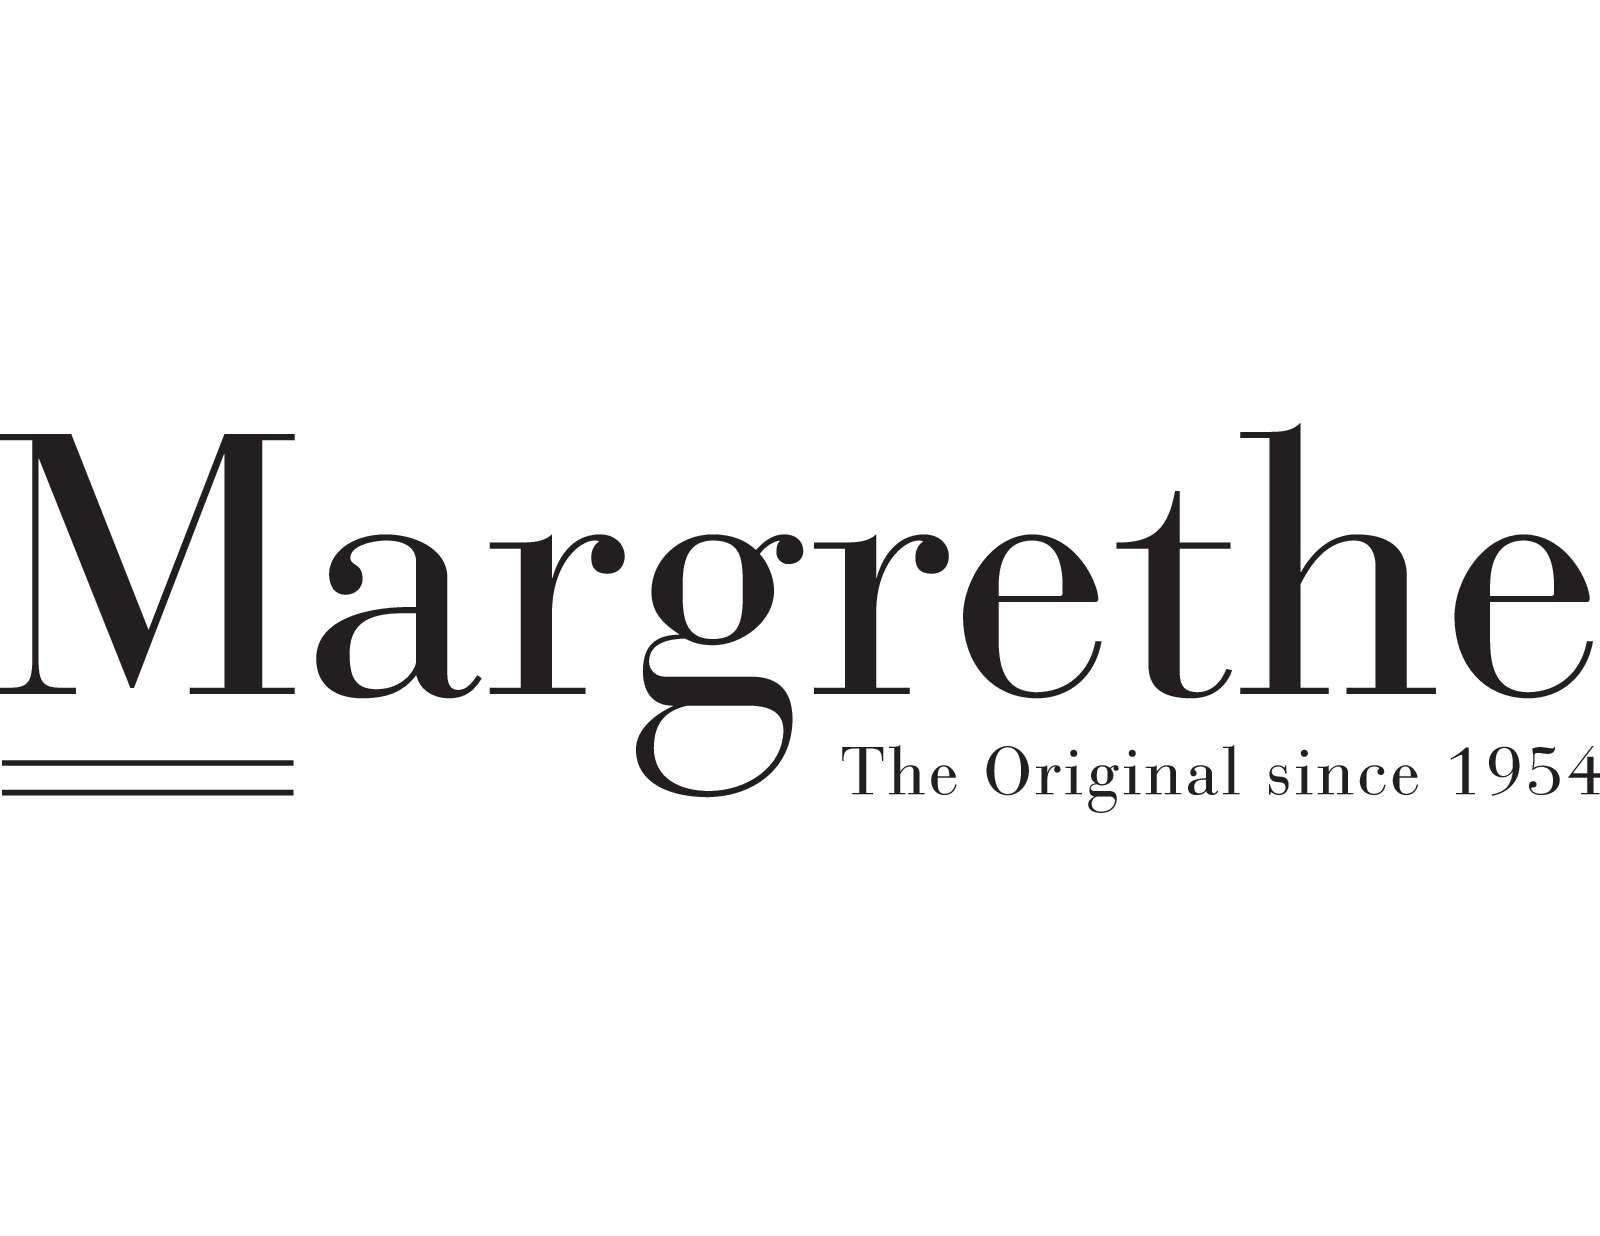 Margrethe logo_black